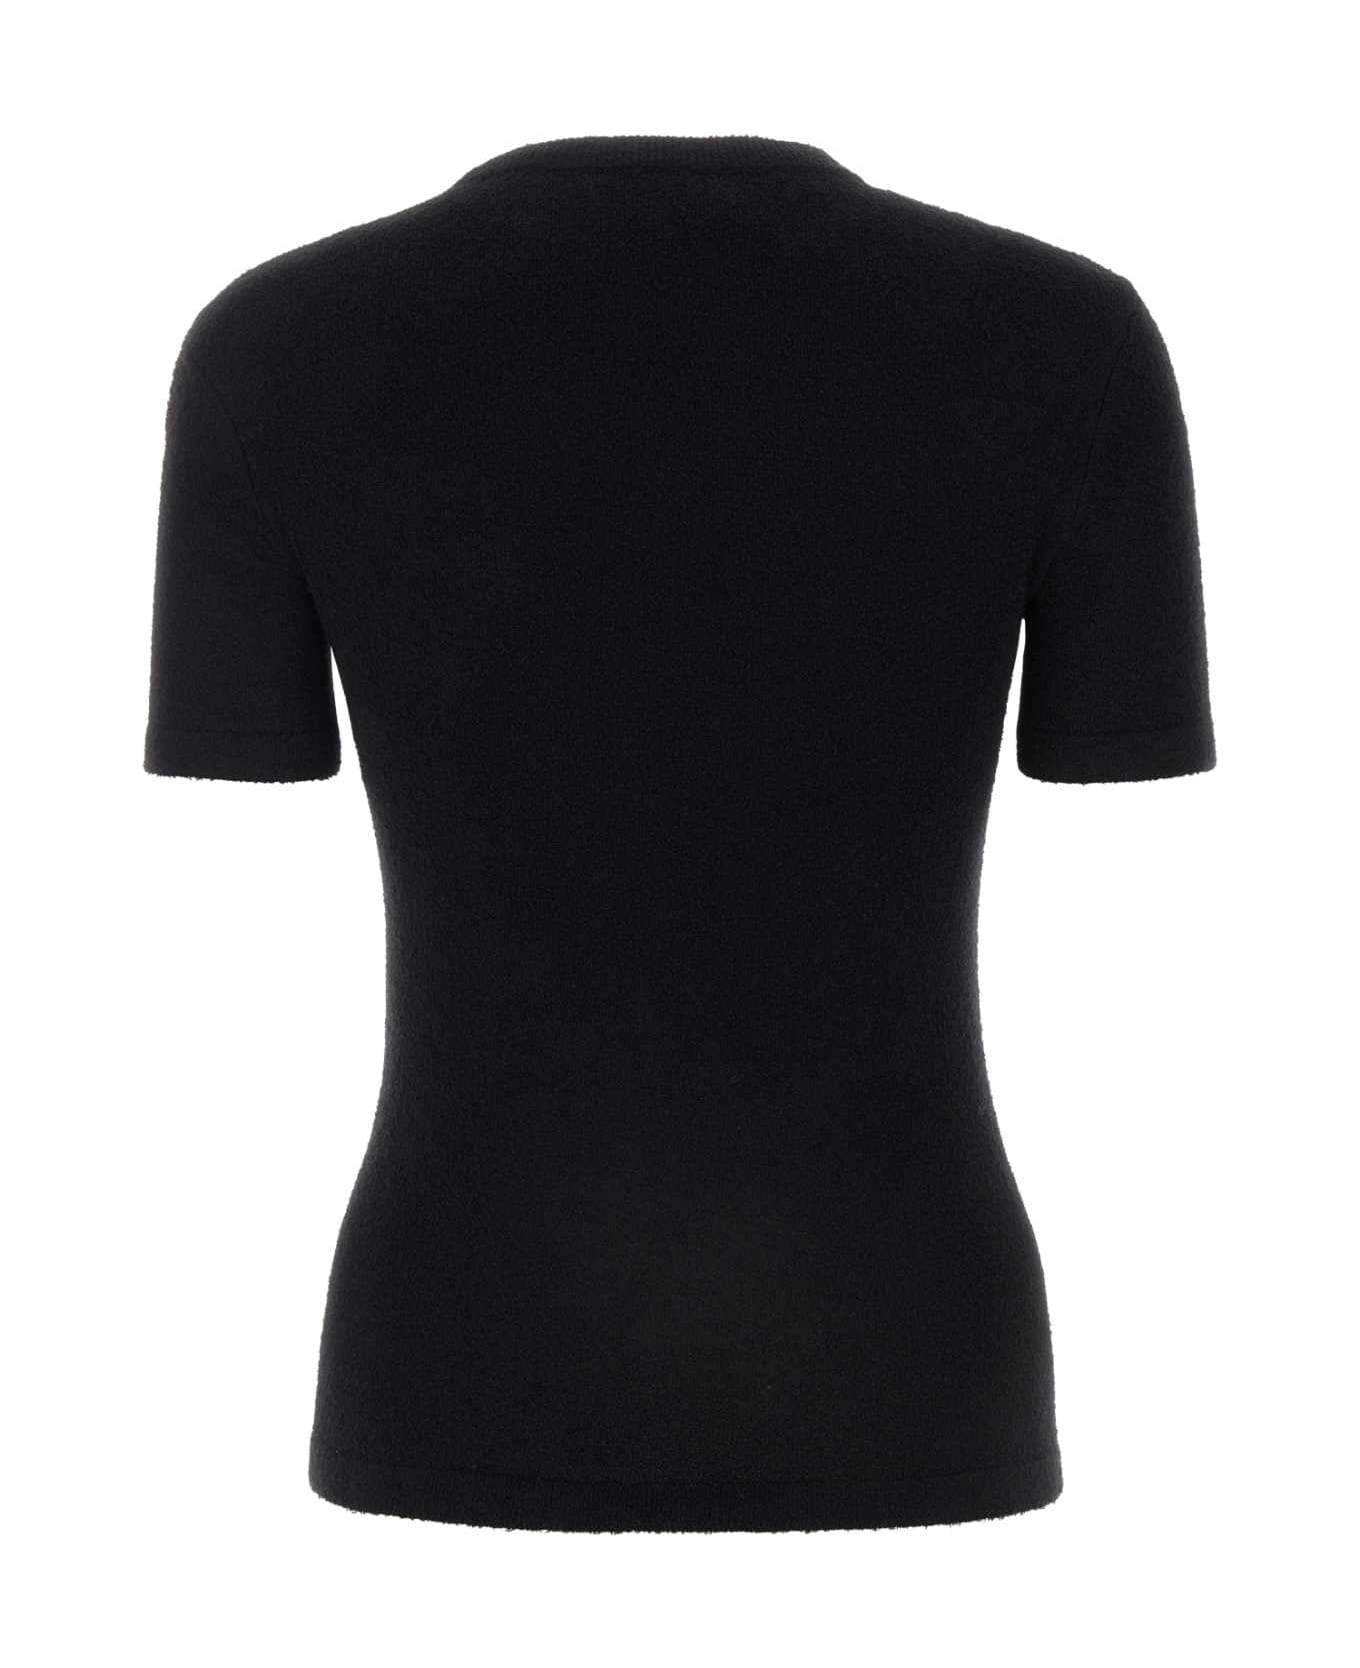 Balenciaga Black Terry Fabric T-shirt - Black Tシャツ